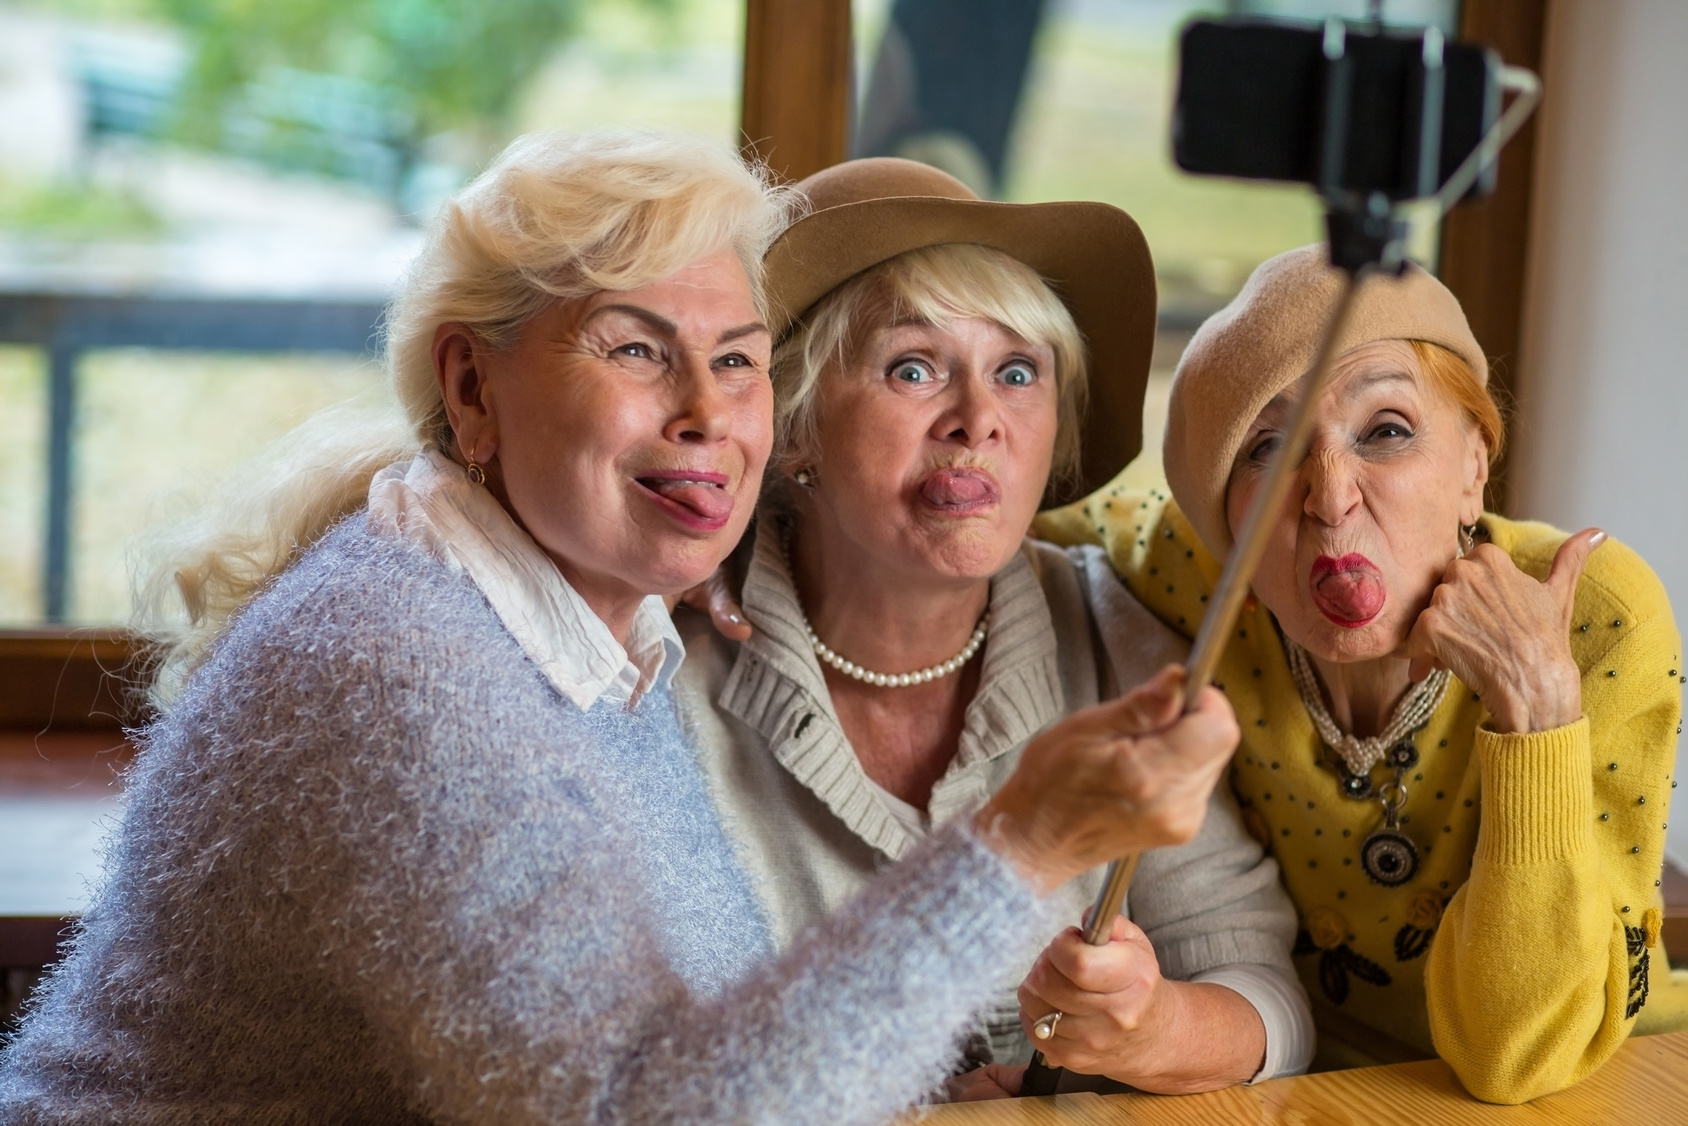 Three ladies taking selfie. Senior women showing tongue. Fooling around like children.